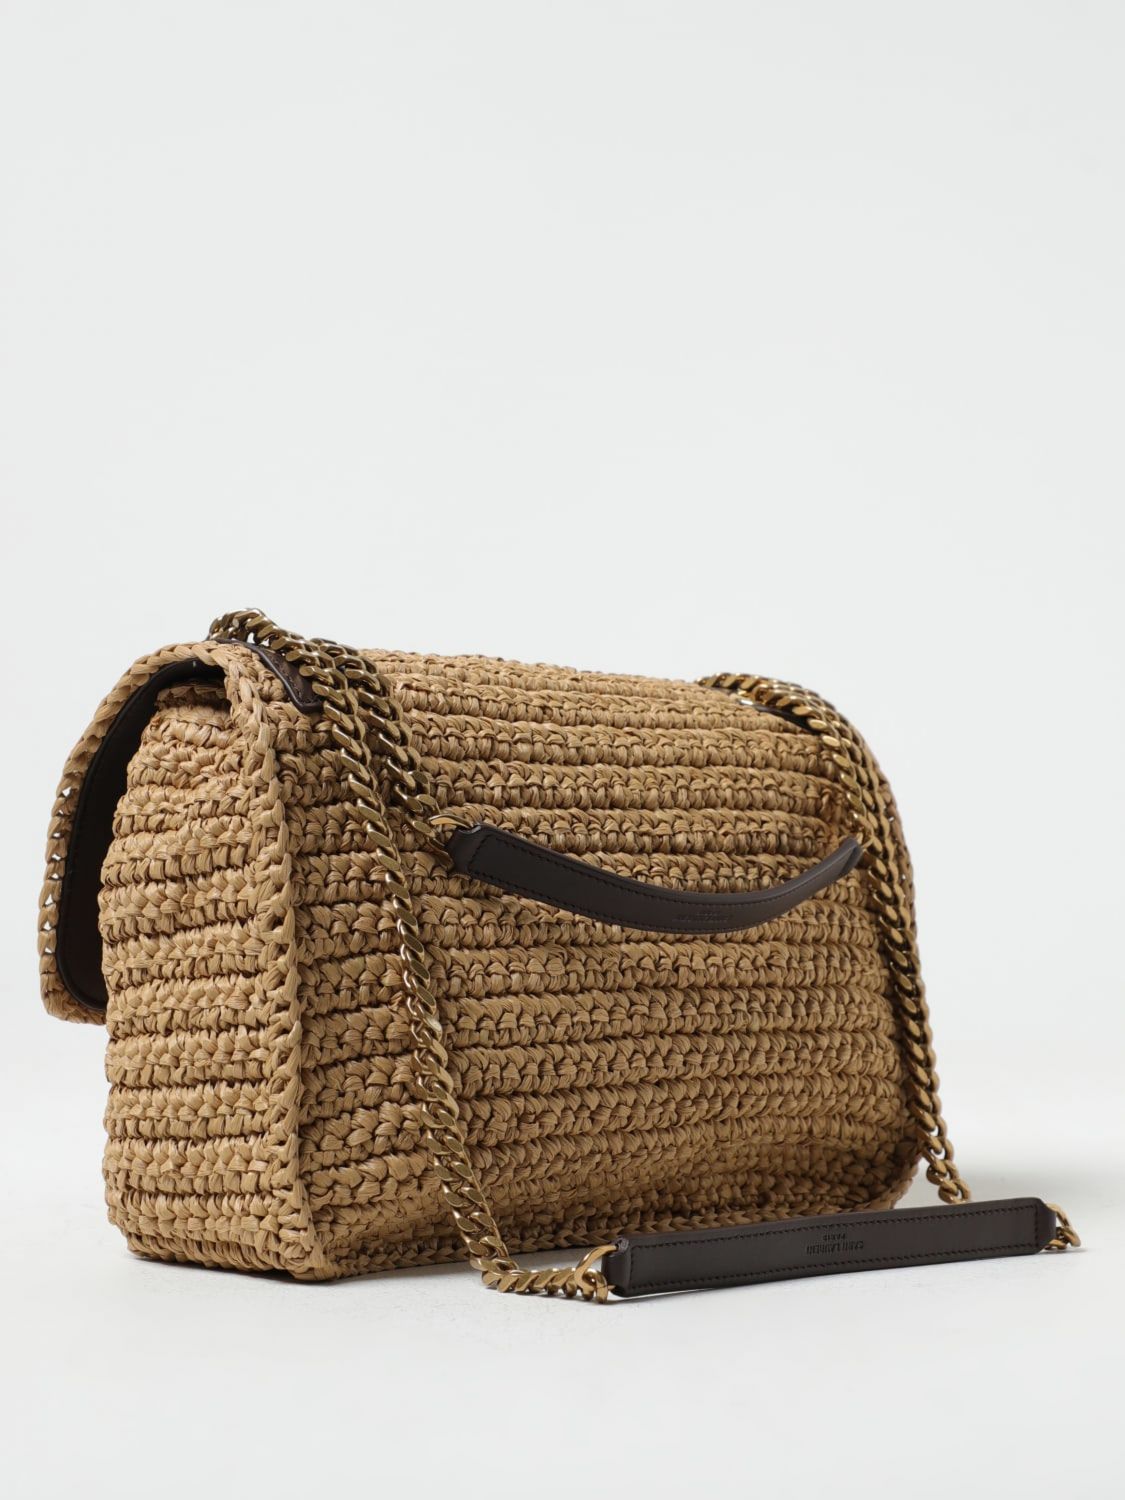 SAINT LAURENT: shoulder bag for woman - Natural  Saint Laurent shoulder bag  633187 GG66W online at